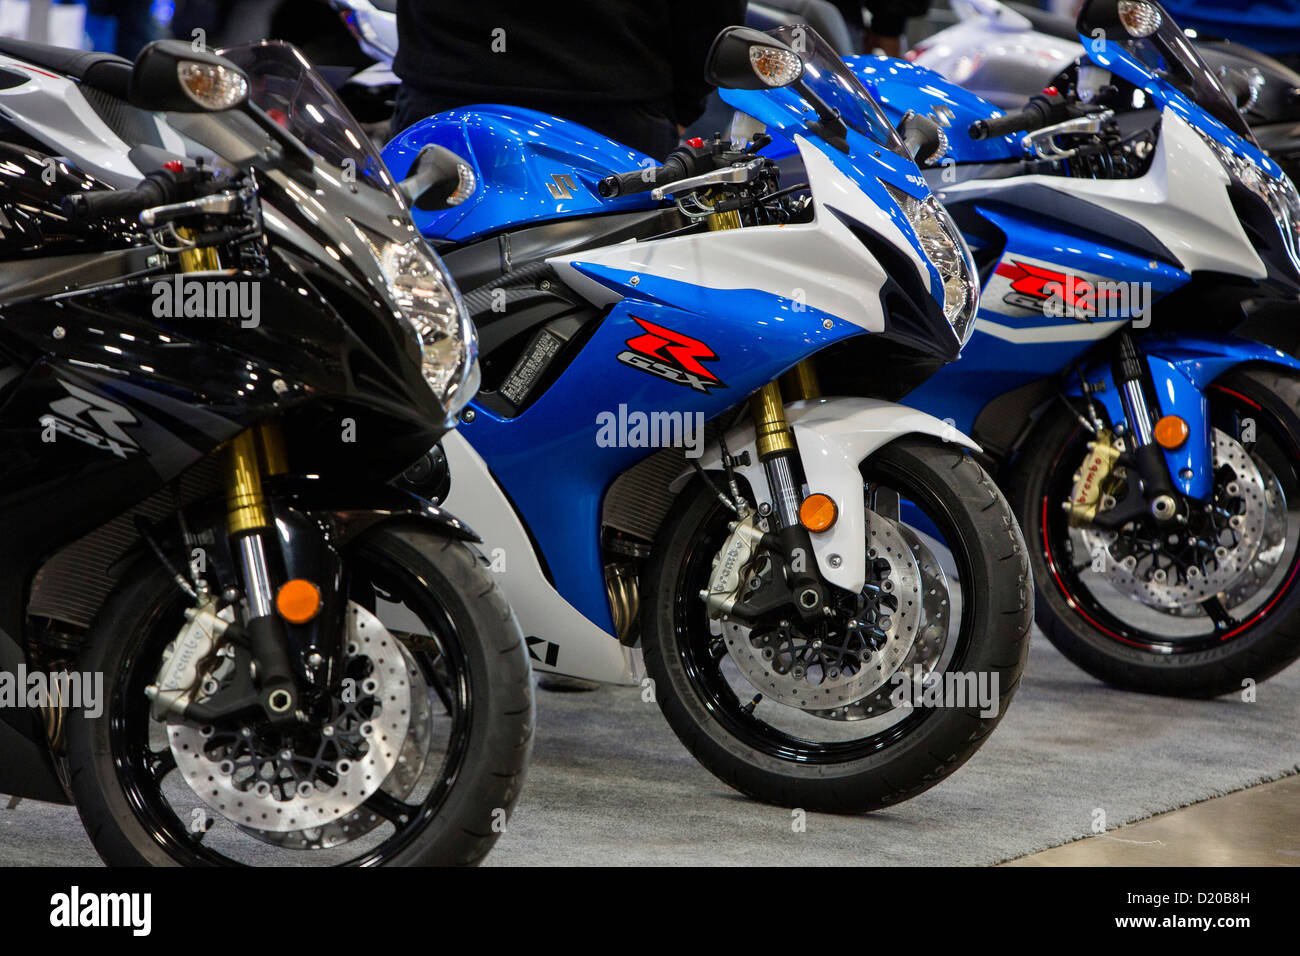 Suzuki motorcycles on display at the Washington Motorcycle Show. Stock Photo